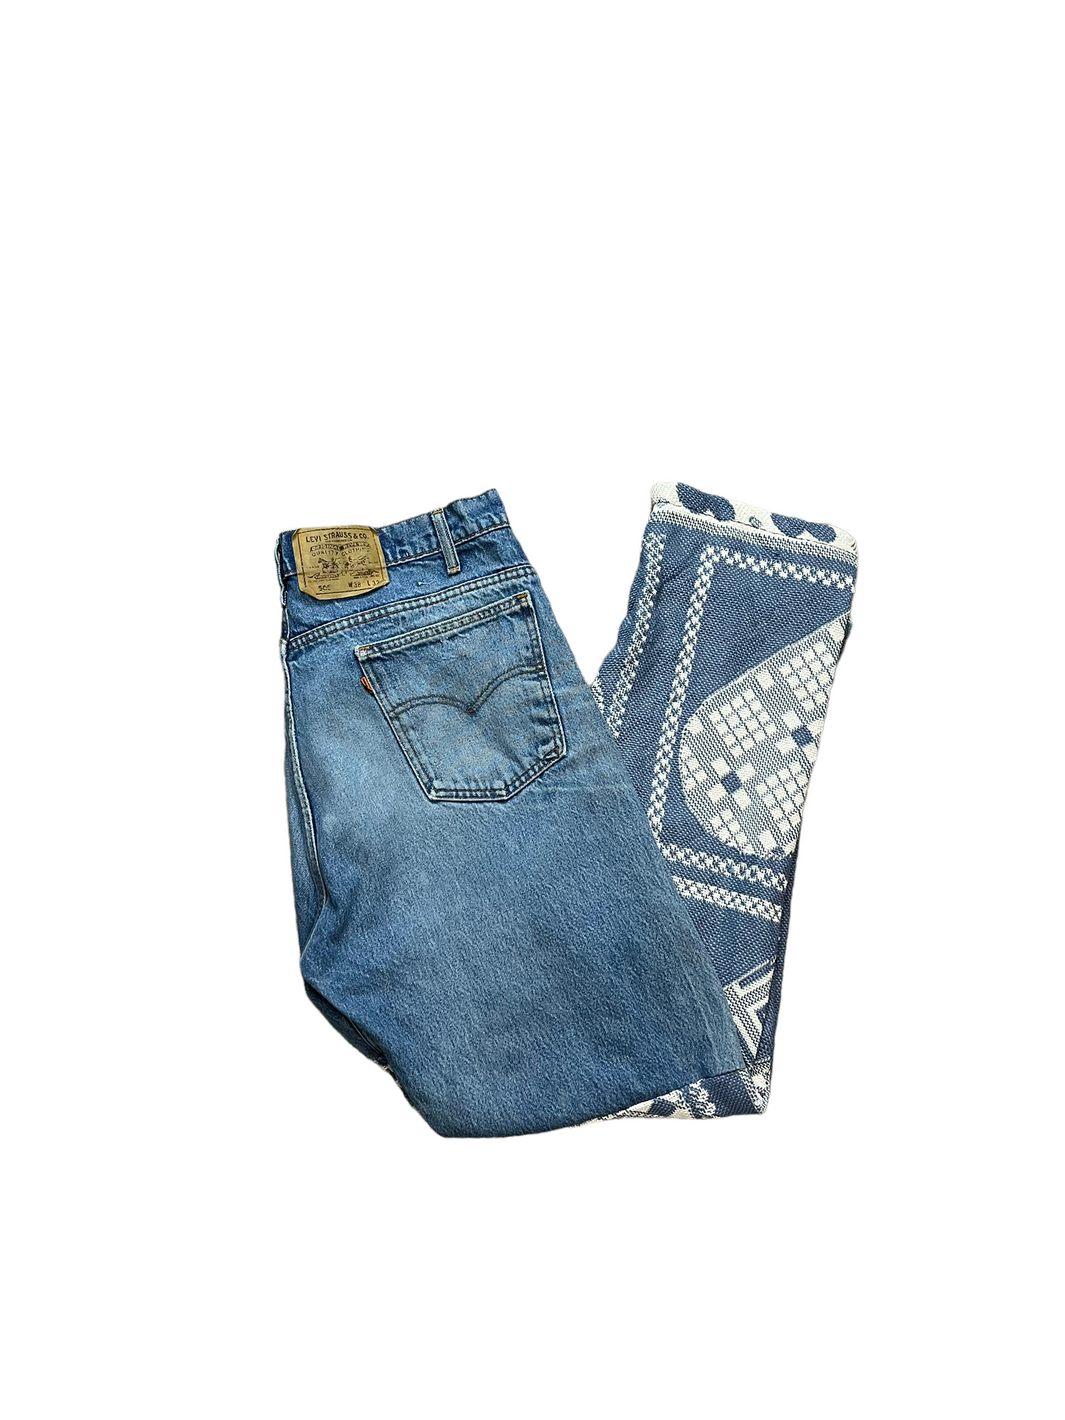 Levi’s Orange tab Customized Jeans